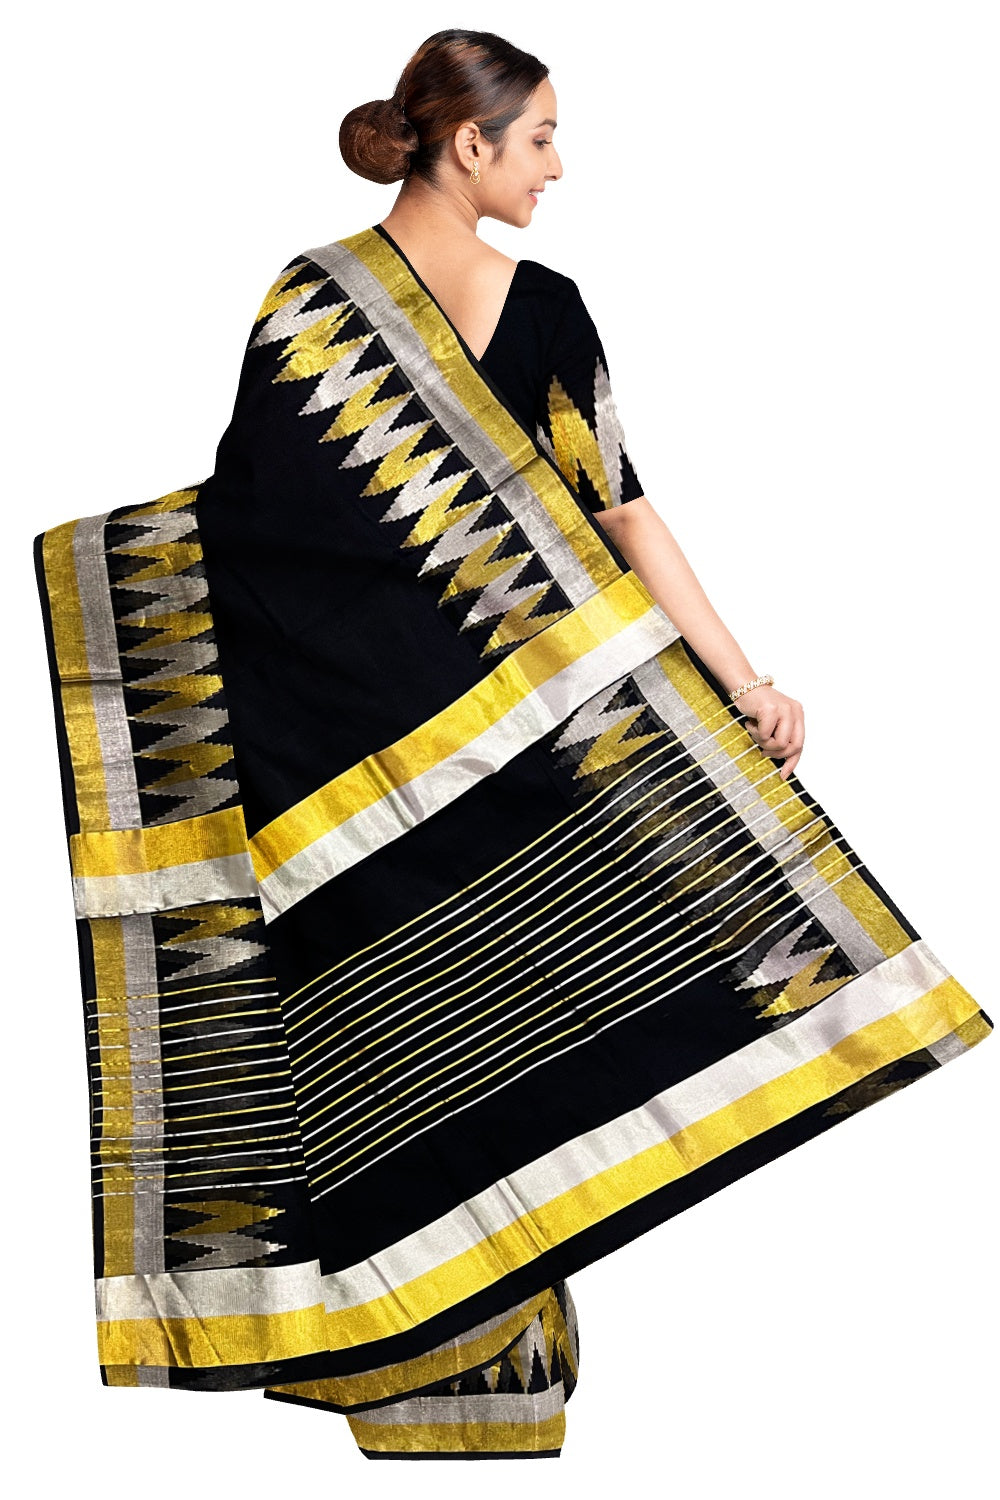 Southloom™ Premium Handloom Black Kerala Saree with Golden and Silver Woven Temple Border